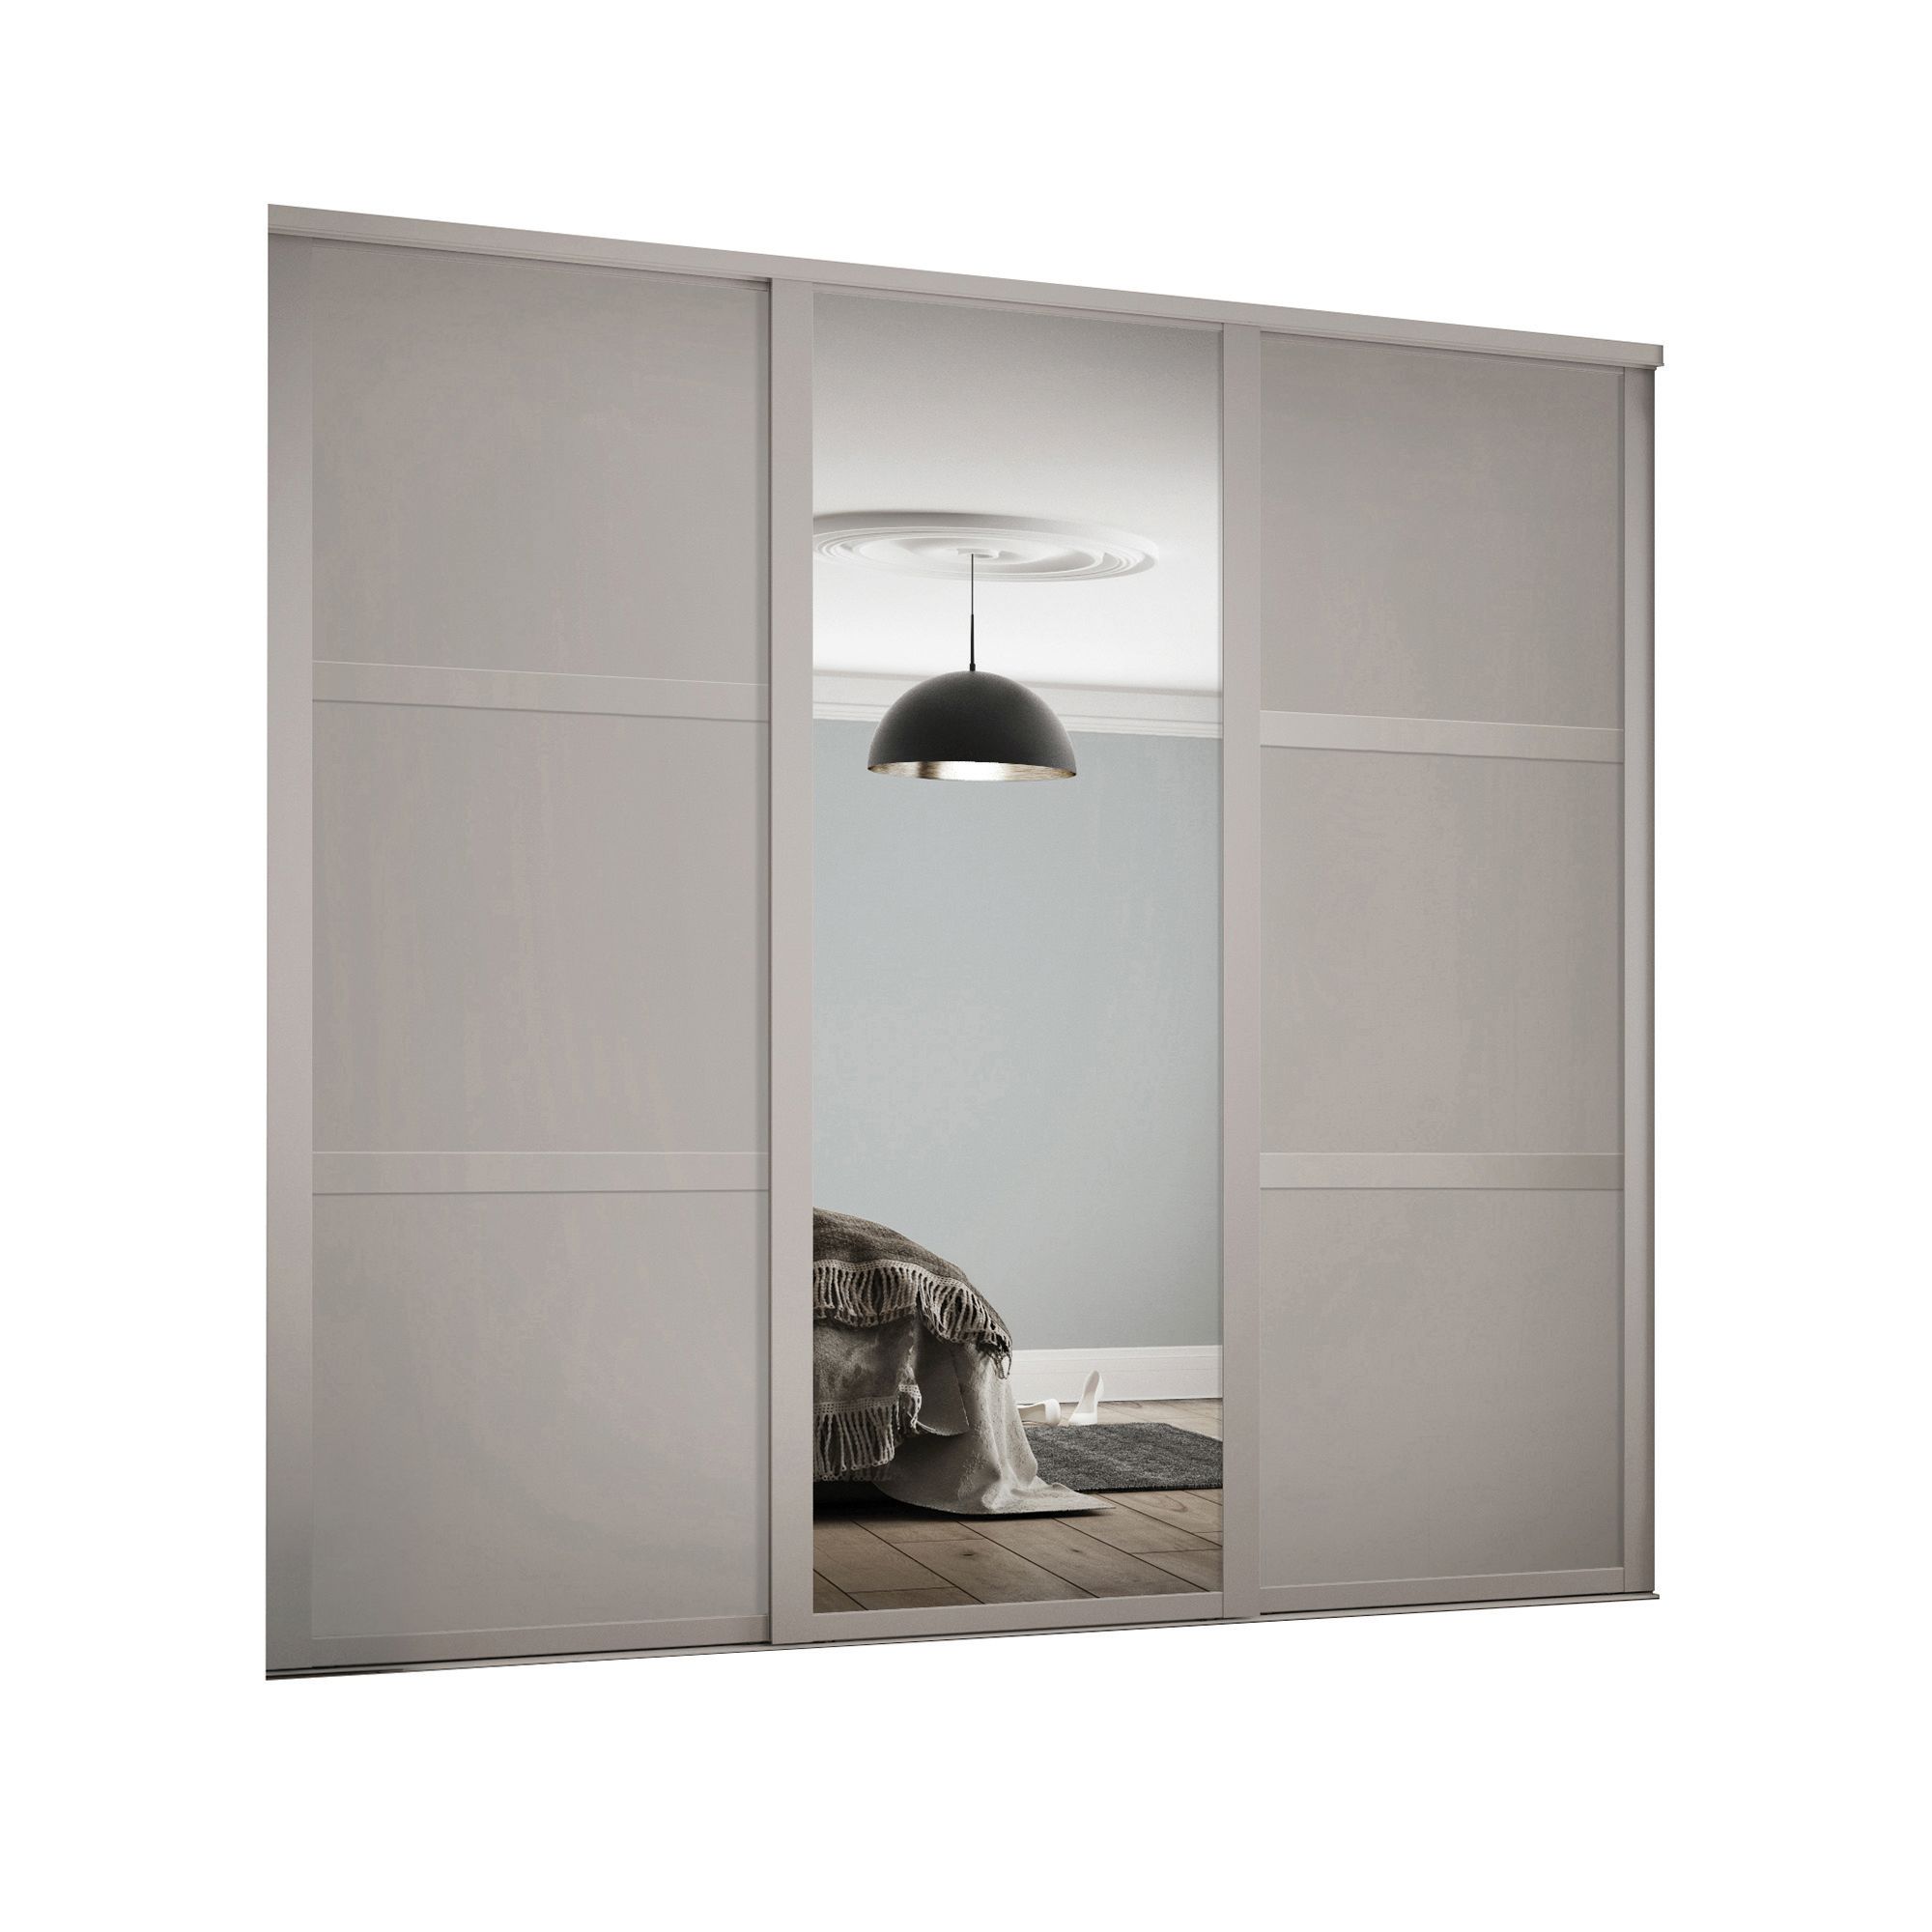 Image of Spacepro 610mm Cashmere Shaker frame 3 panel & 1x Single panel Mirror Sliding Wardrobe Door Kit